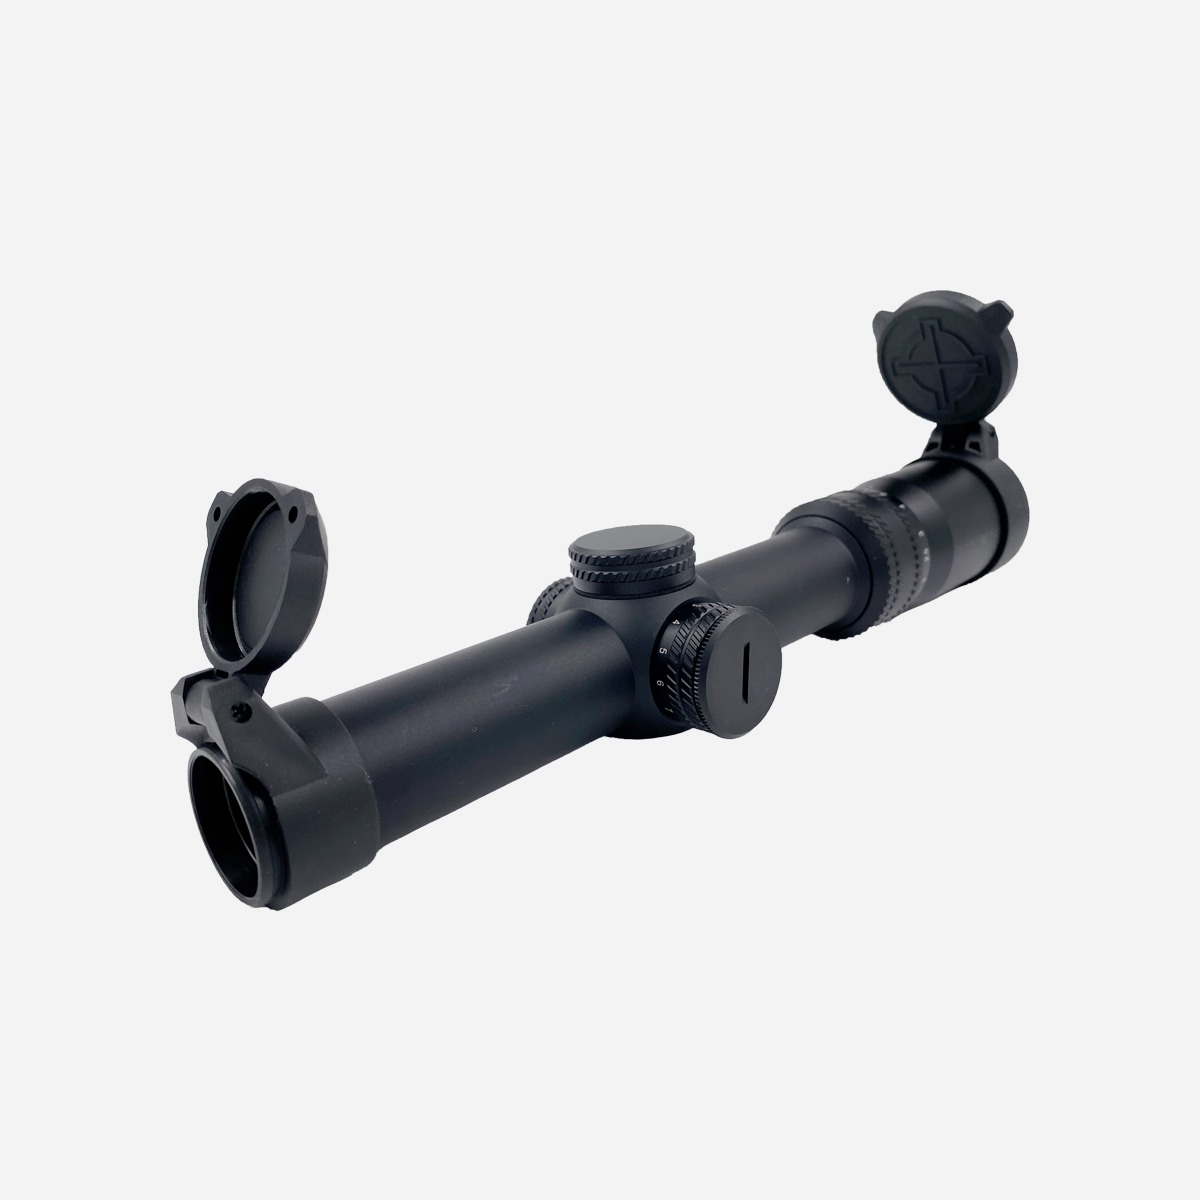 Sightmark – Citadel 1-6x24 CR1 Riflescope